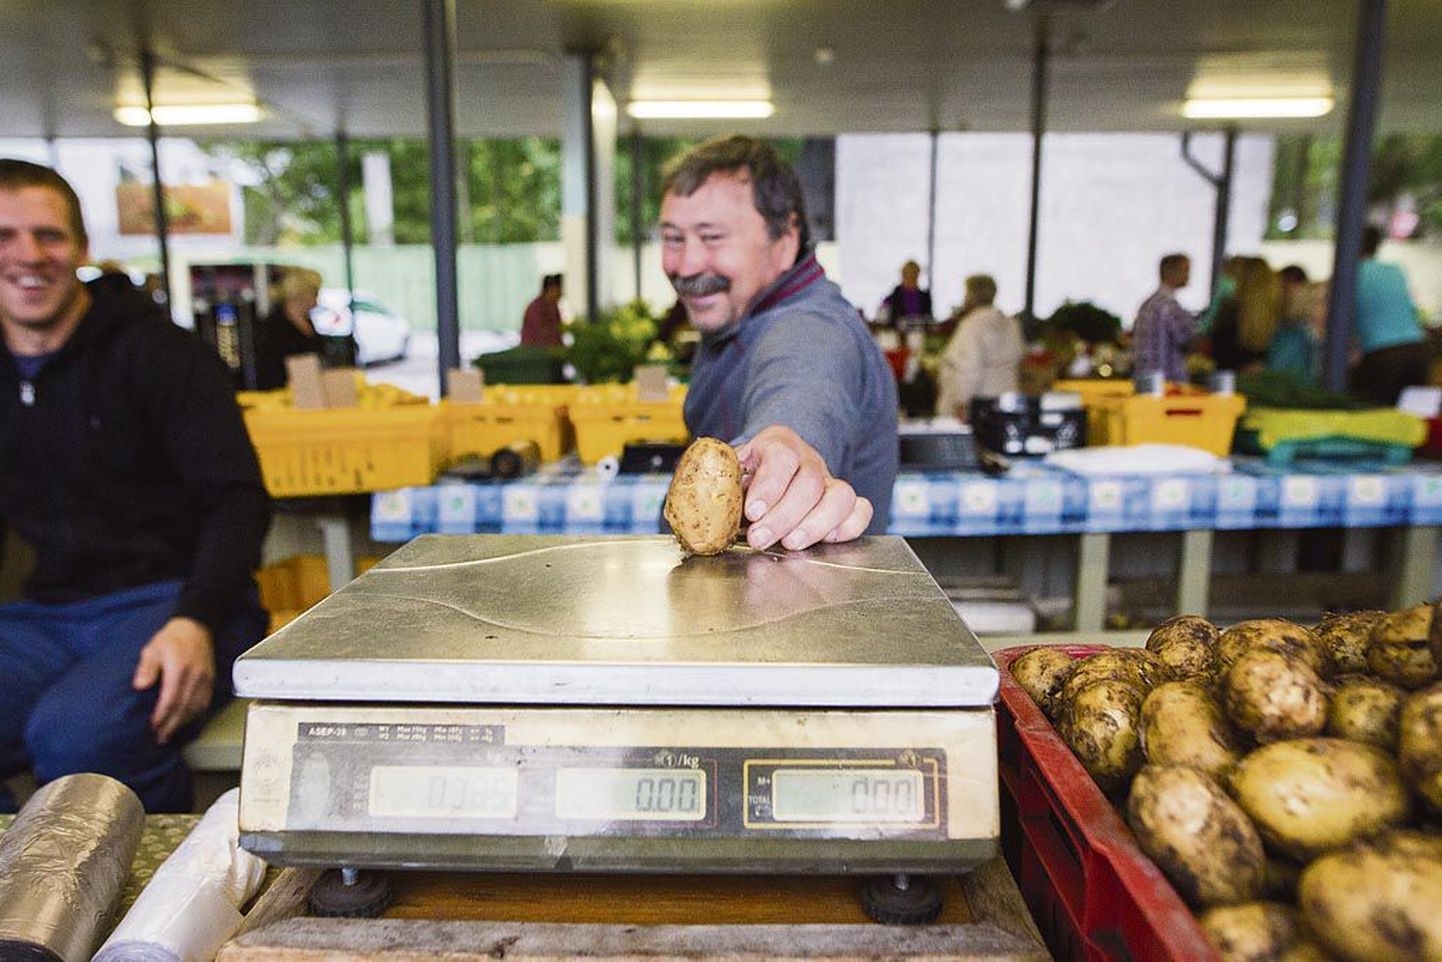 ““Gala” ongi see maailma parim kartul,” naljatas Audru kartulikasvataja.